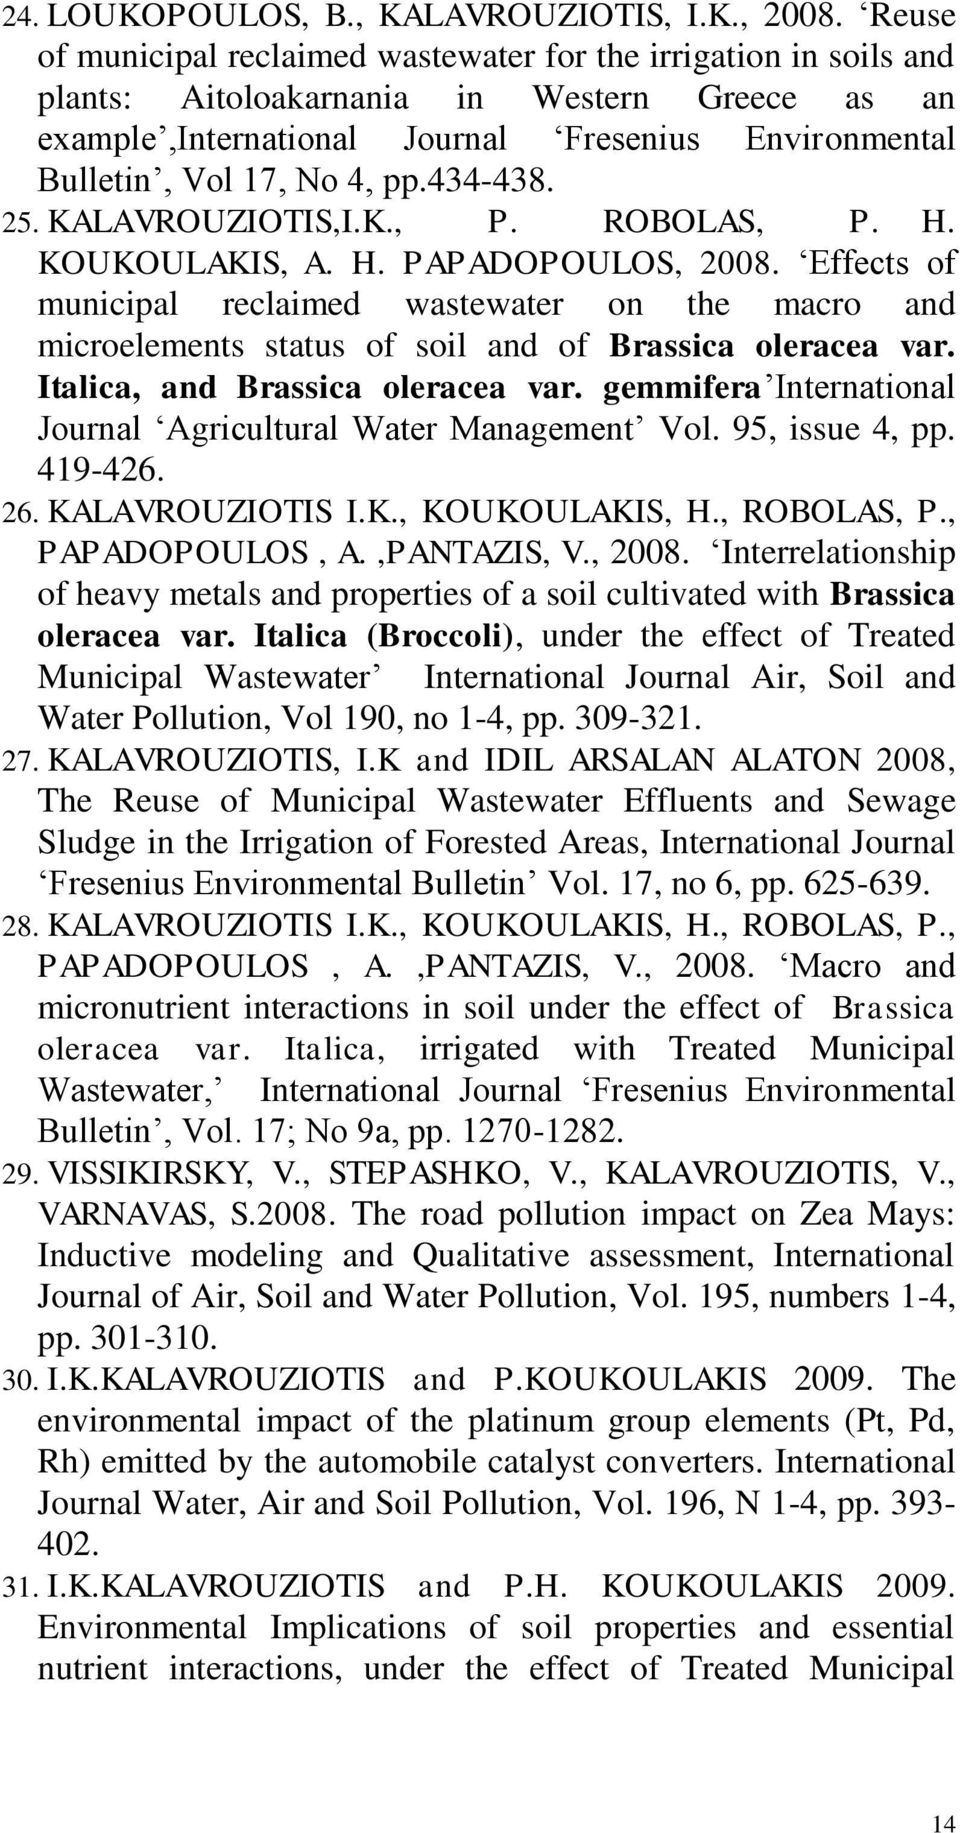 pp.434-438. 25. KALAVROUZIOTIS,I.K., P. ROBOLAS, P. H. KOUKOULAKIS, A. H. PAPADOPOULOS, 2008.